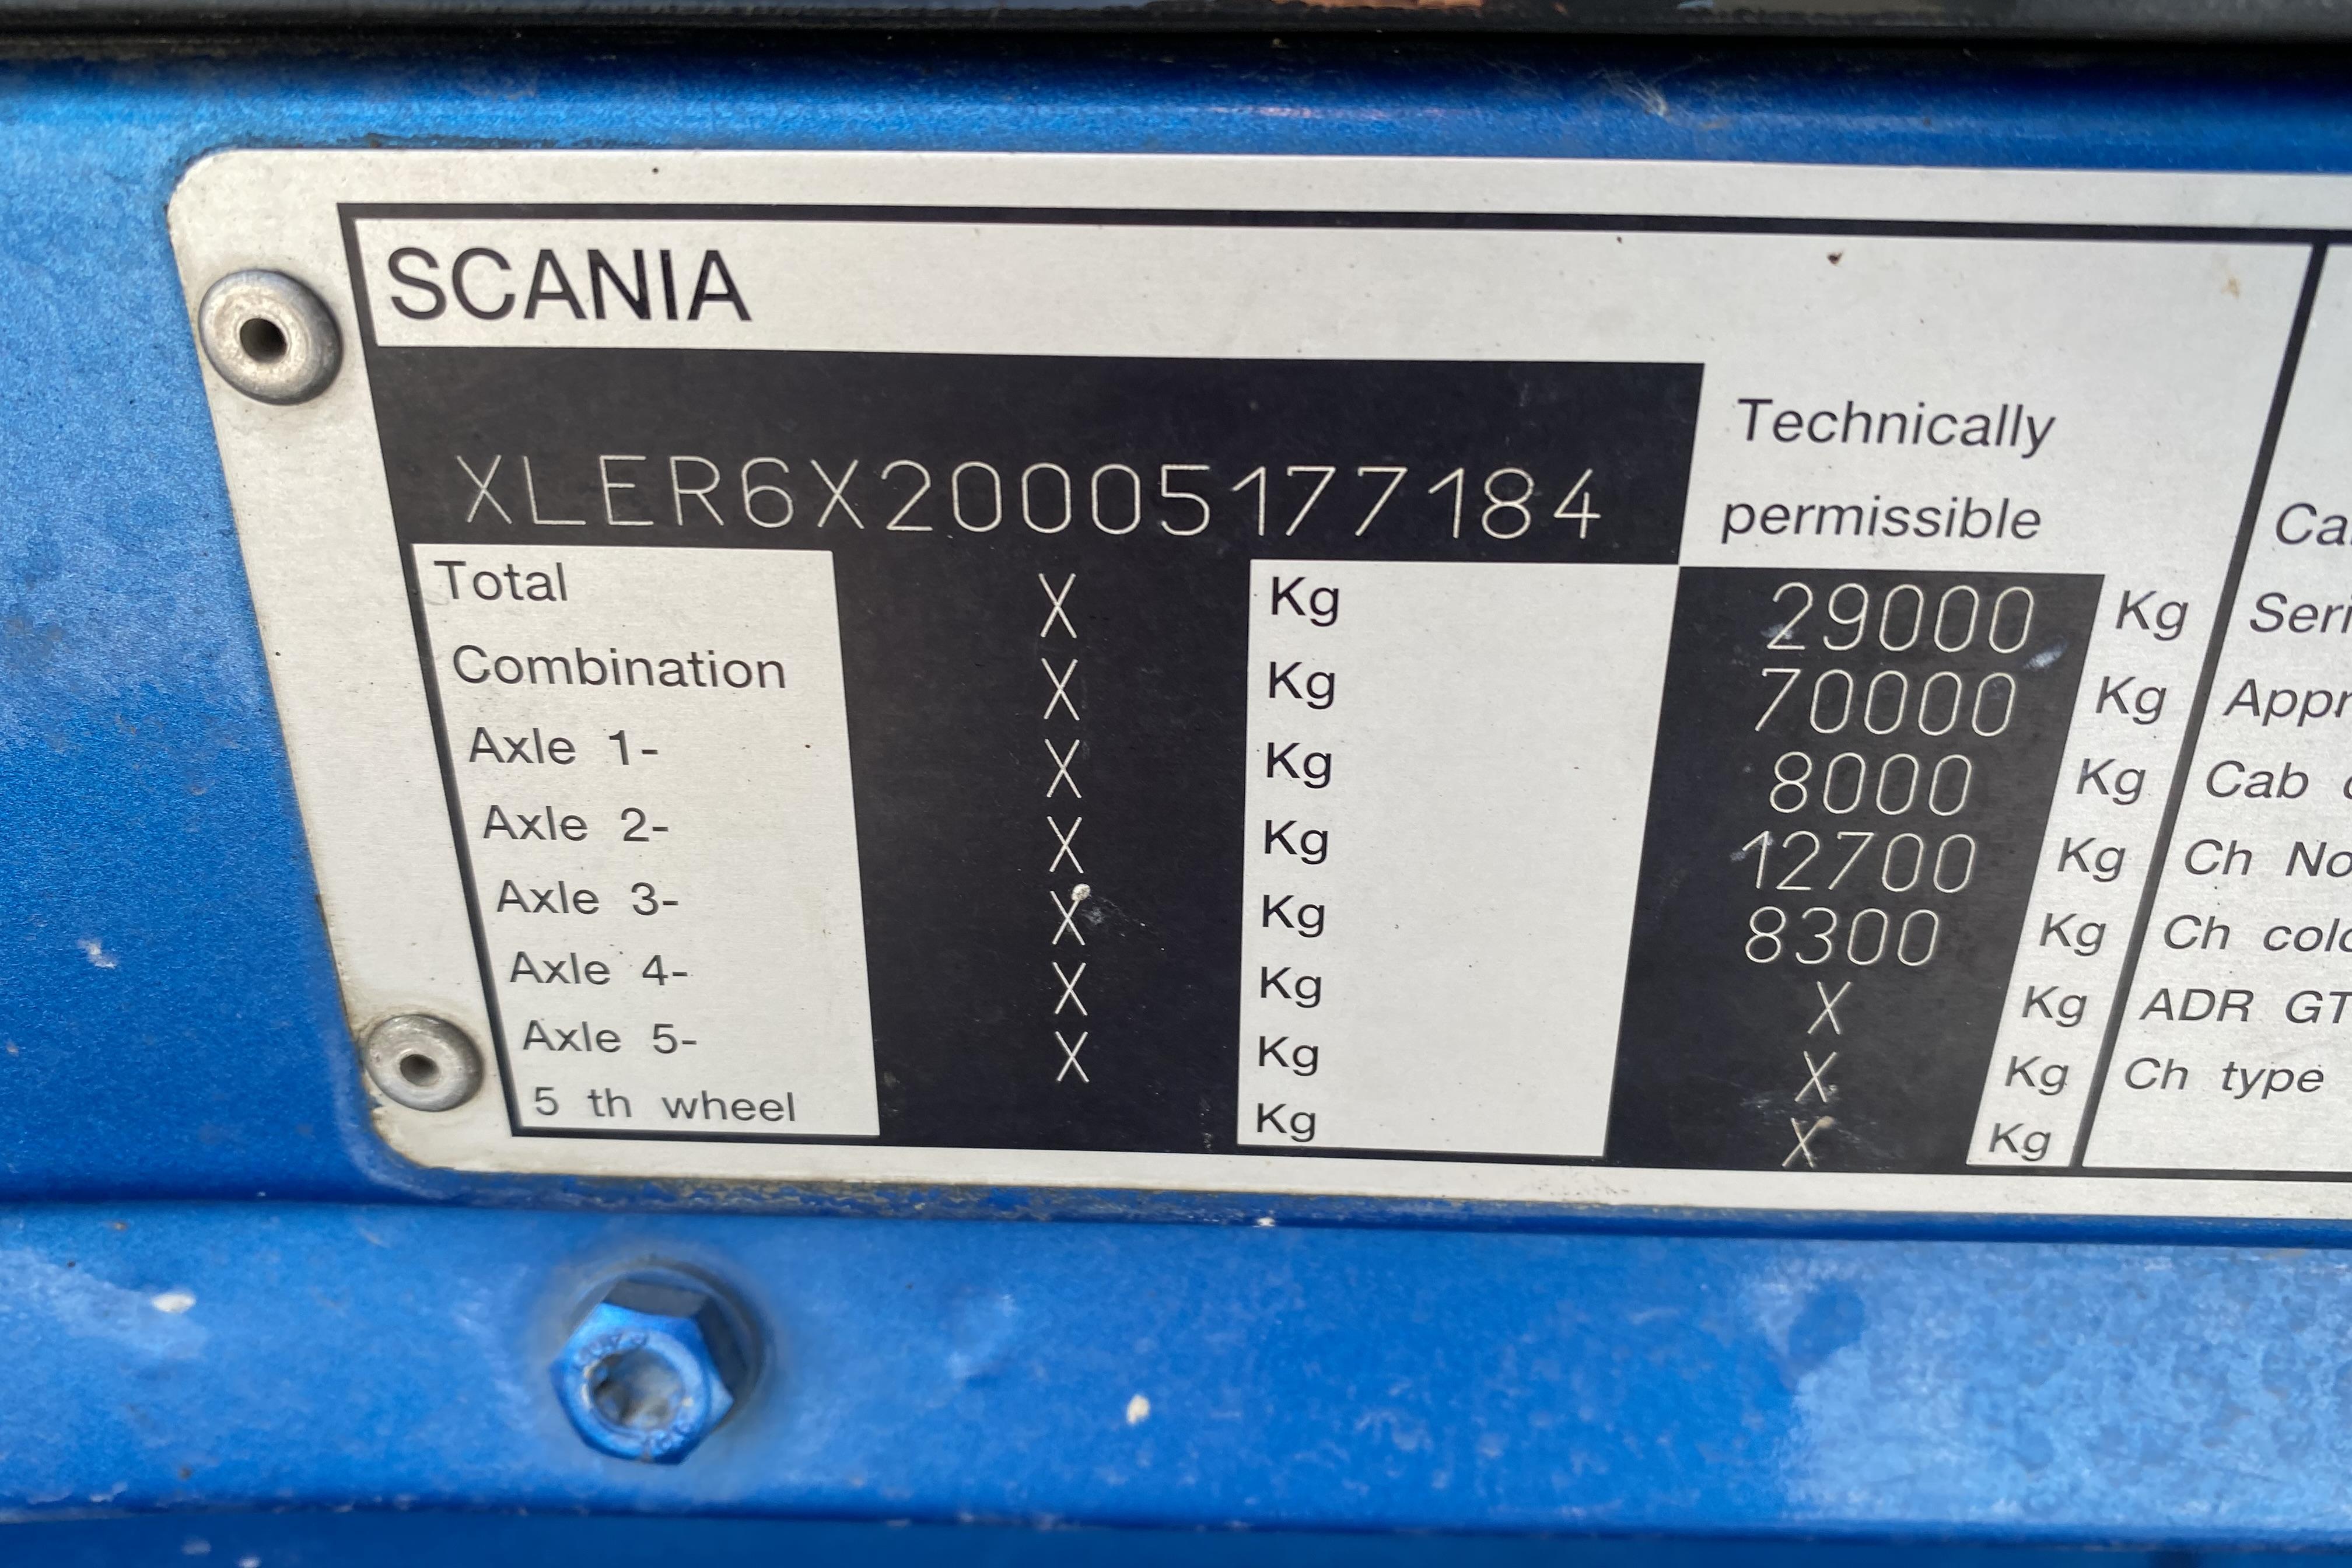 SCANIA R560 - 1 242 911 km - Automatic - blue - 2007